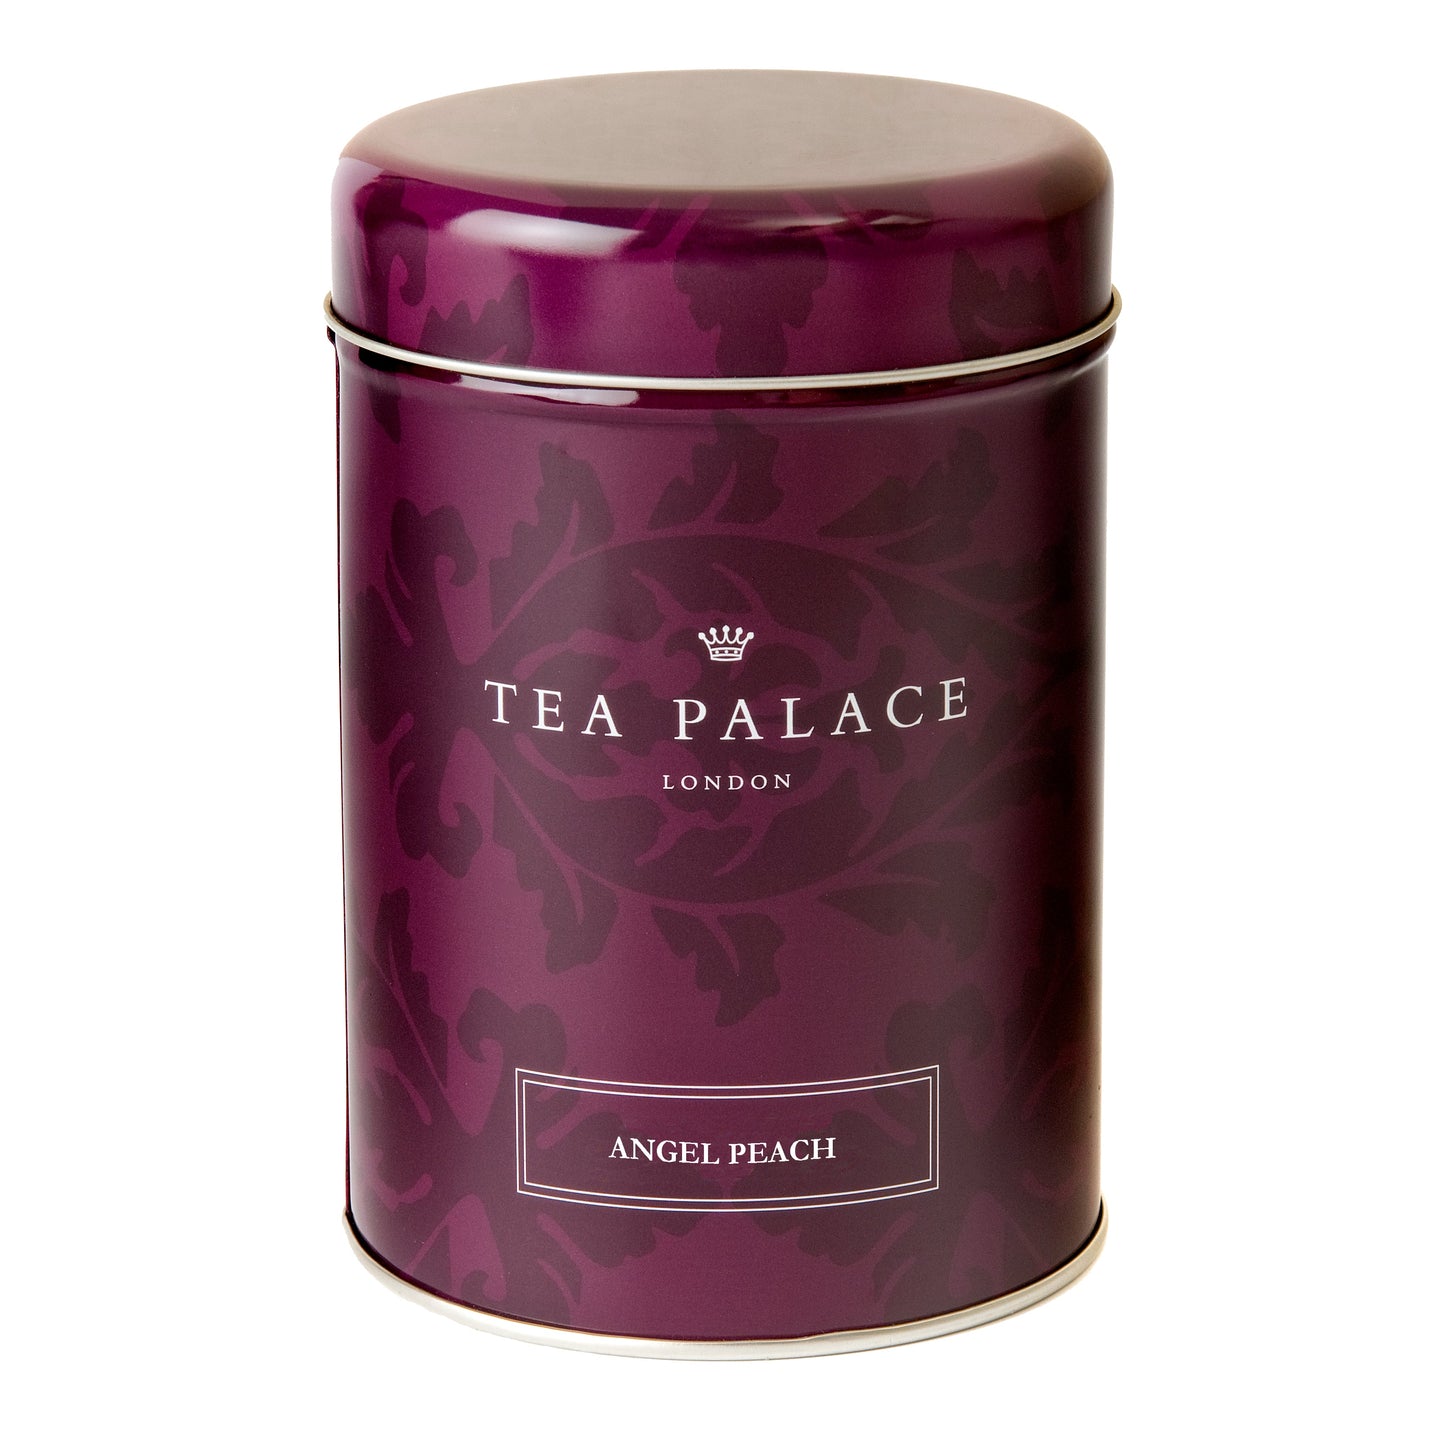 Tea Palace loose leaf tea caddy